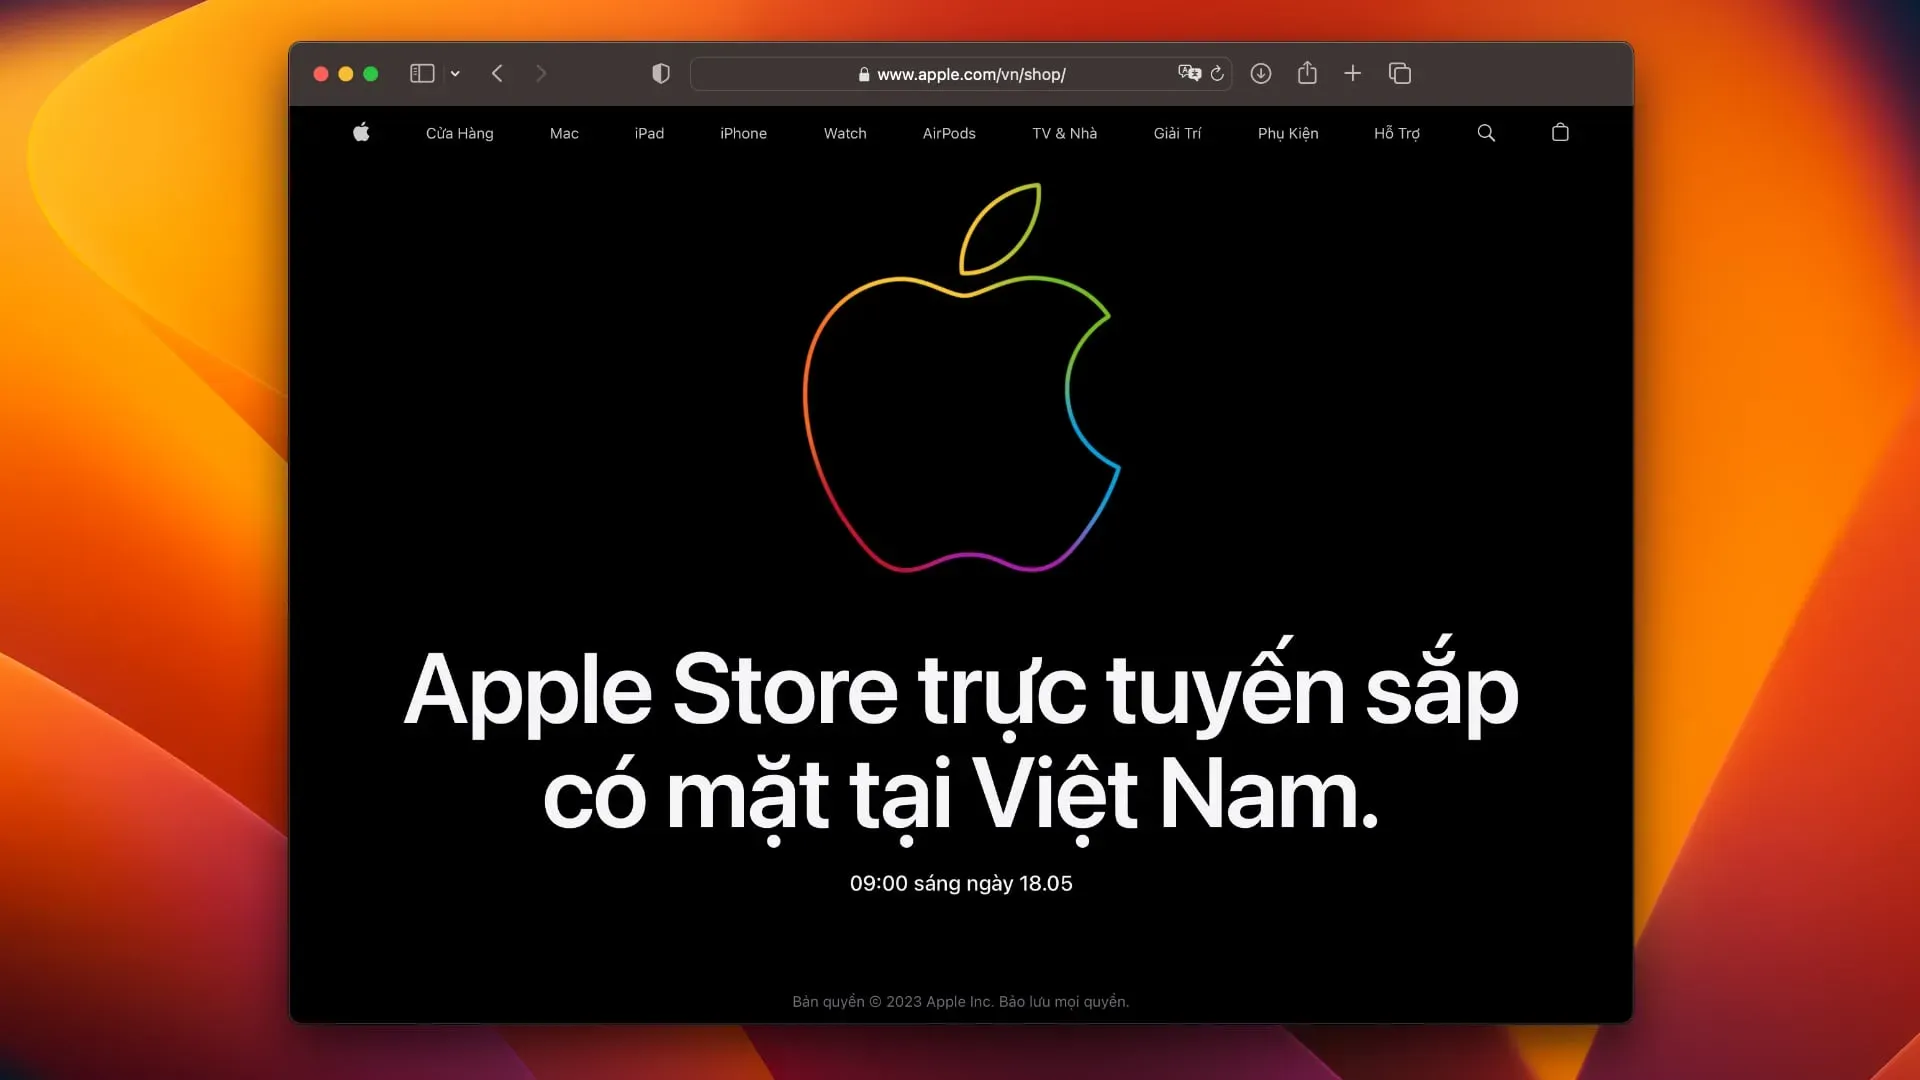 Apples vietnamesischer Online-Shop in Safari kündigt die Eröffnung am 23. Mai an